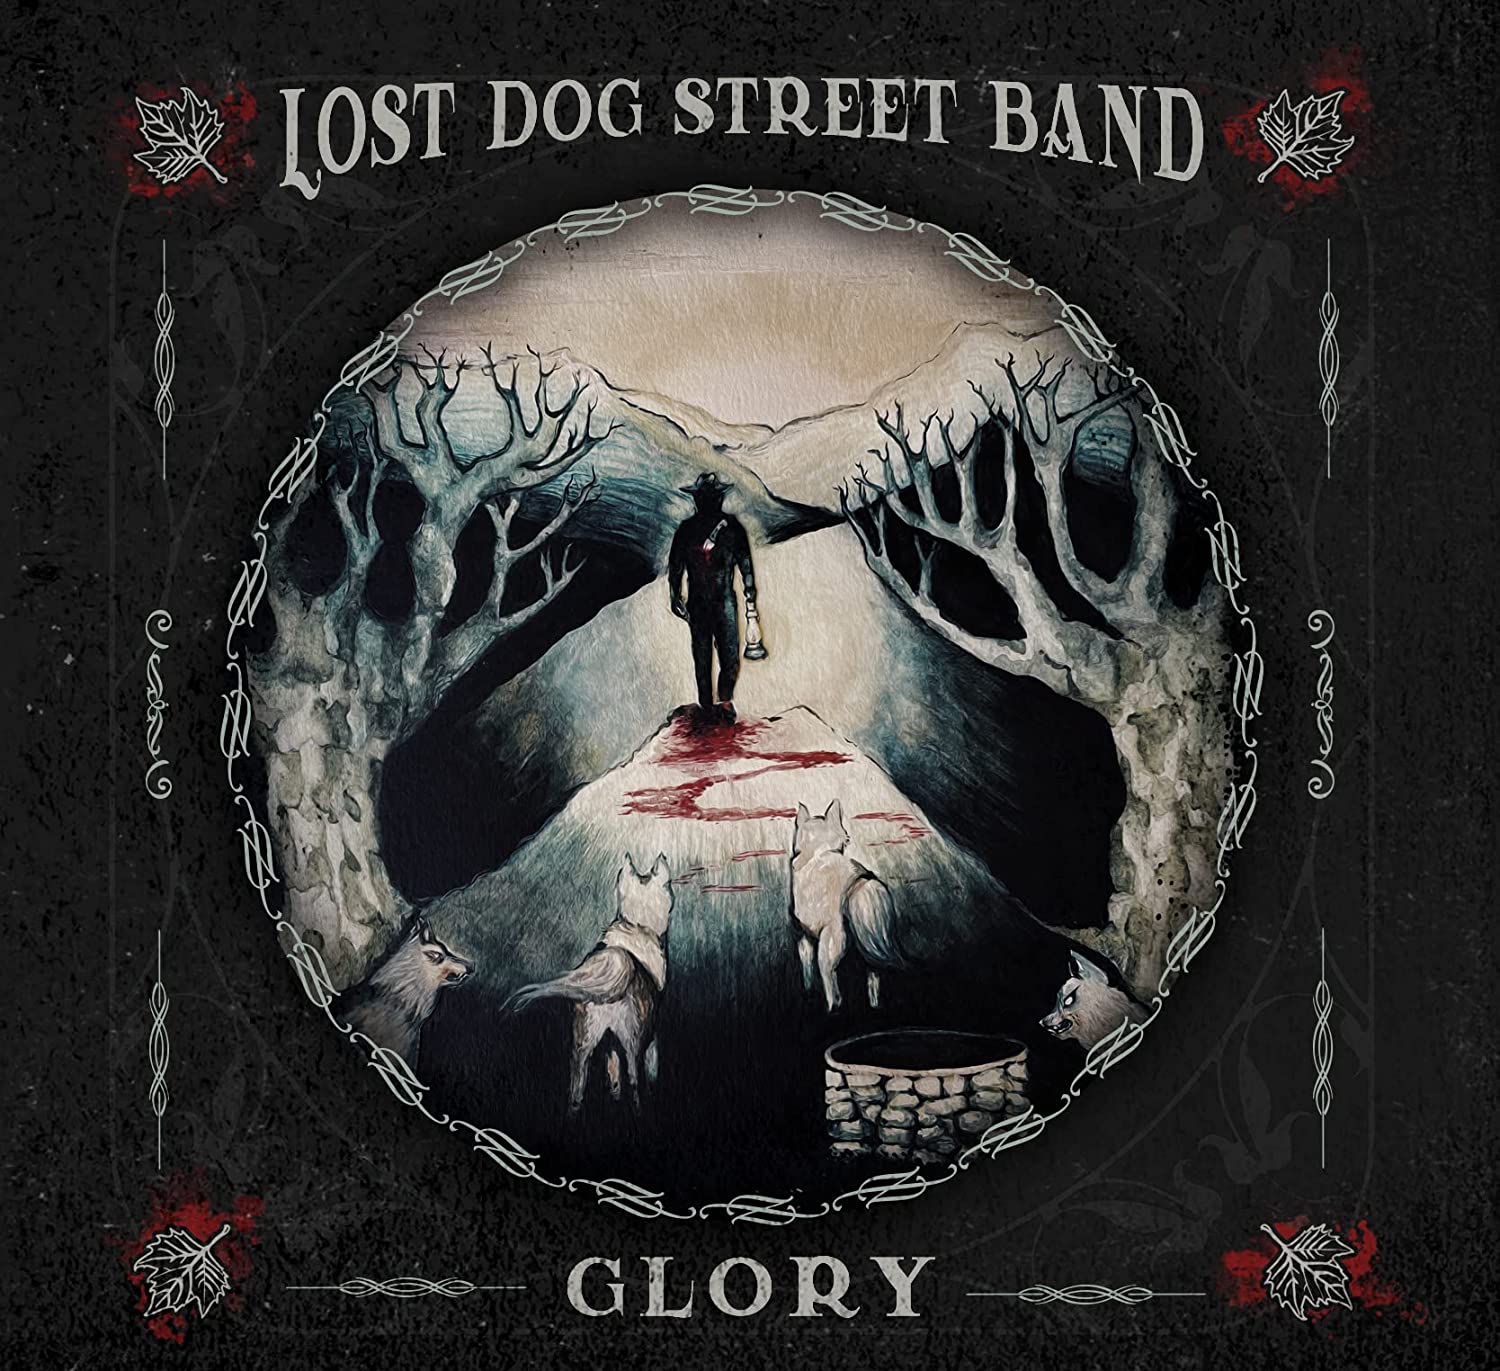 Lost Dog Street Band - Glory - Third Eye